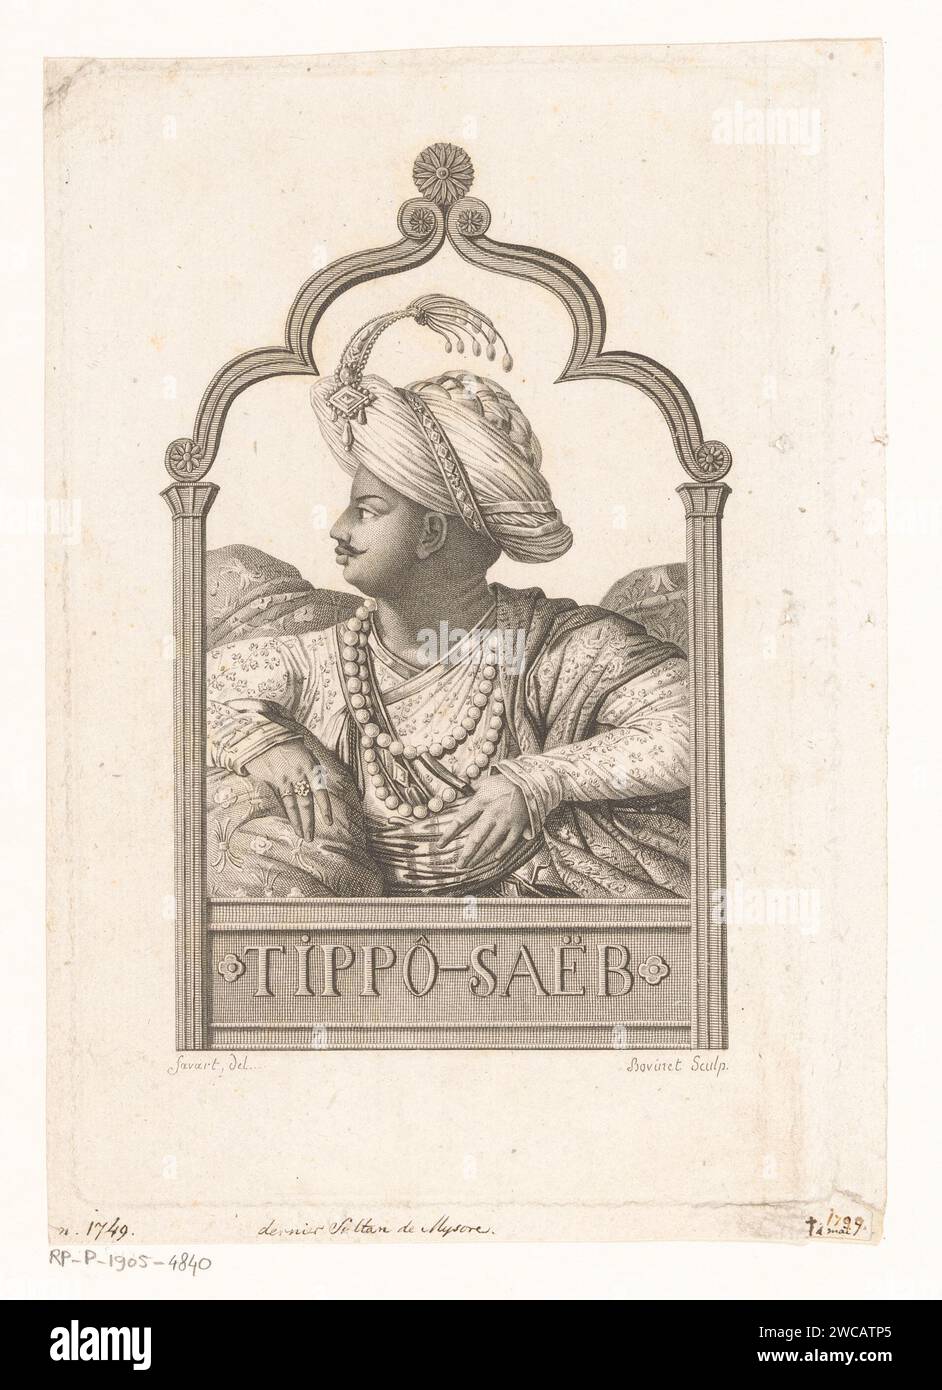 Portret Van Tipu Sahib, Sultan van Mysore, Edme Bovinet, After Savart, 1777 - 1832 Druckpapier, das historische Personen graviert. Andere Souverän. Kopfschutz: Turban. Ornamente, Juwelen Stockfoto